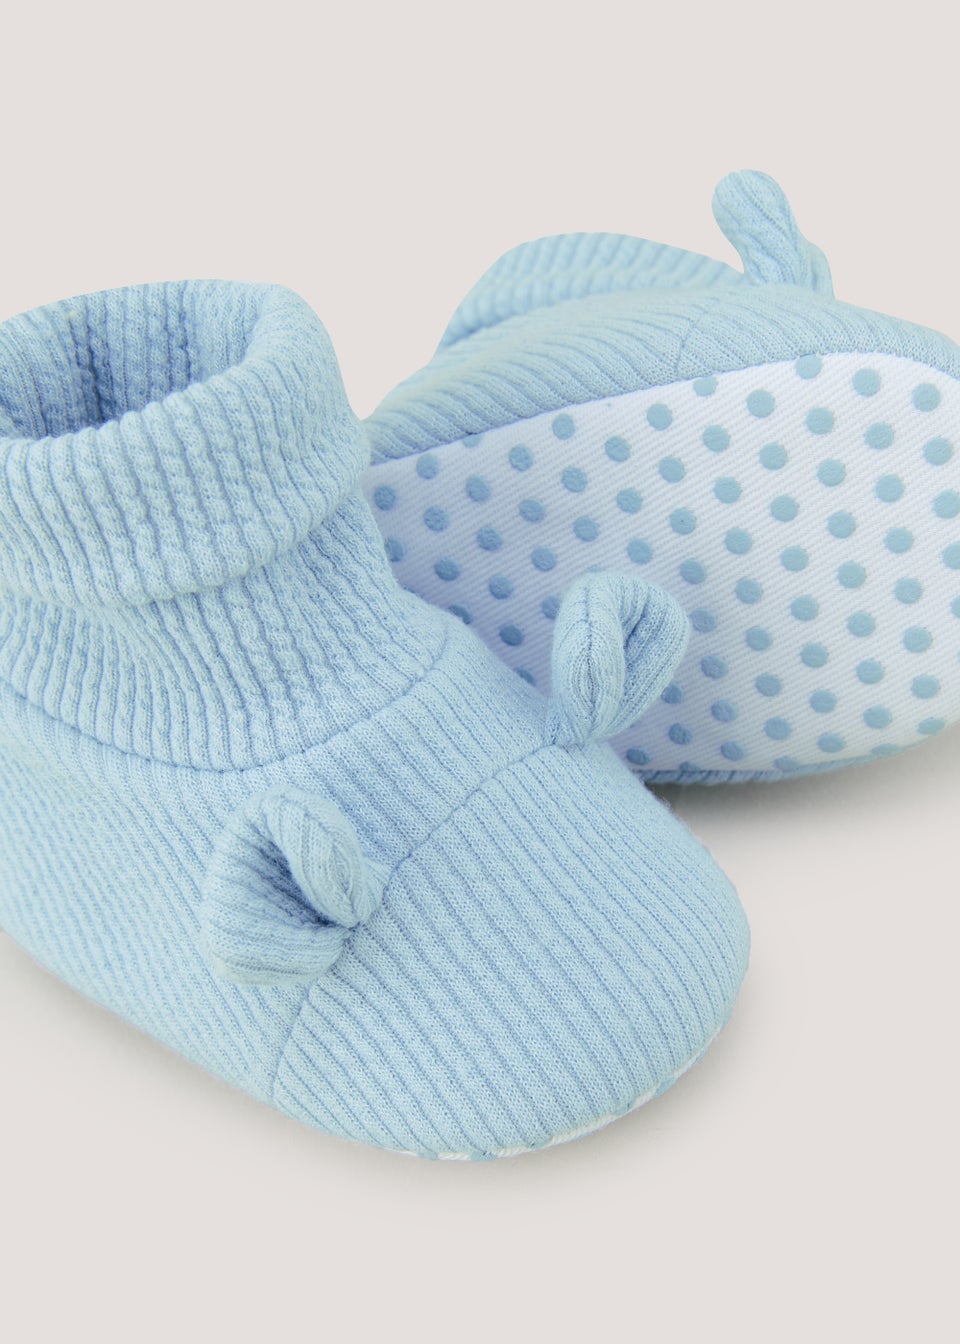 Blue Bunny Soft Sole Baby Sock Booties (Newborn-18mths)